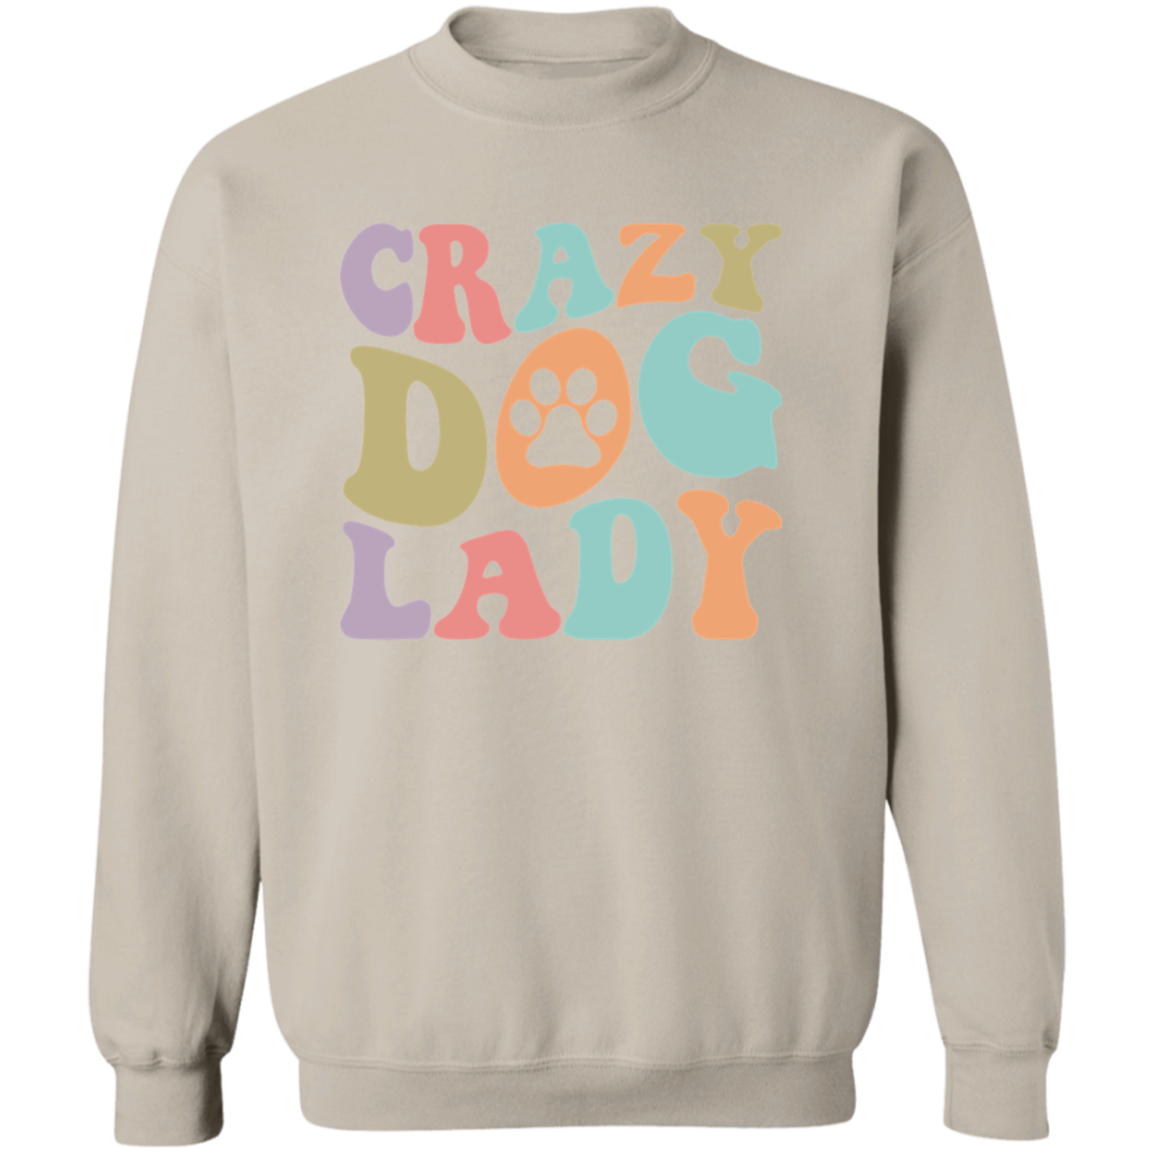 Crazy Dog Lady Paw Print Crewneck Pullover Sweatshirt